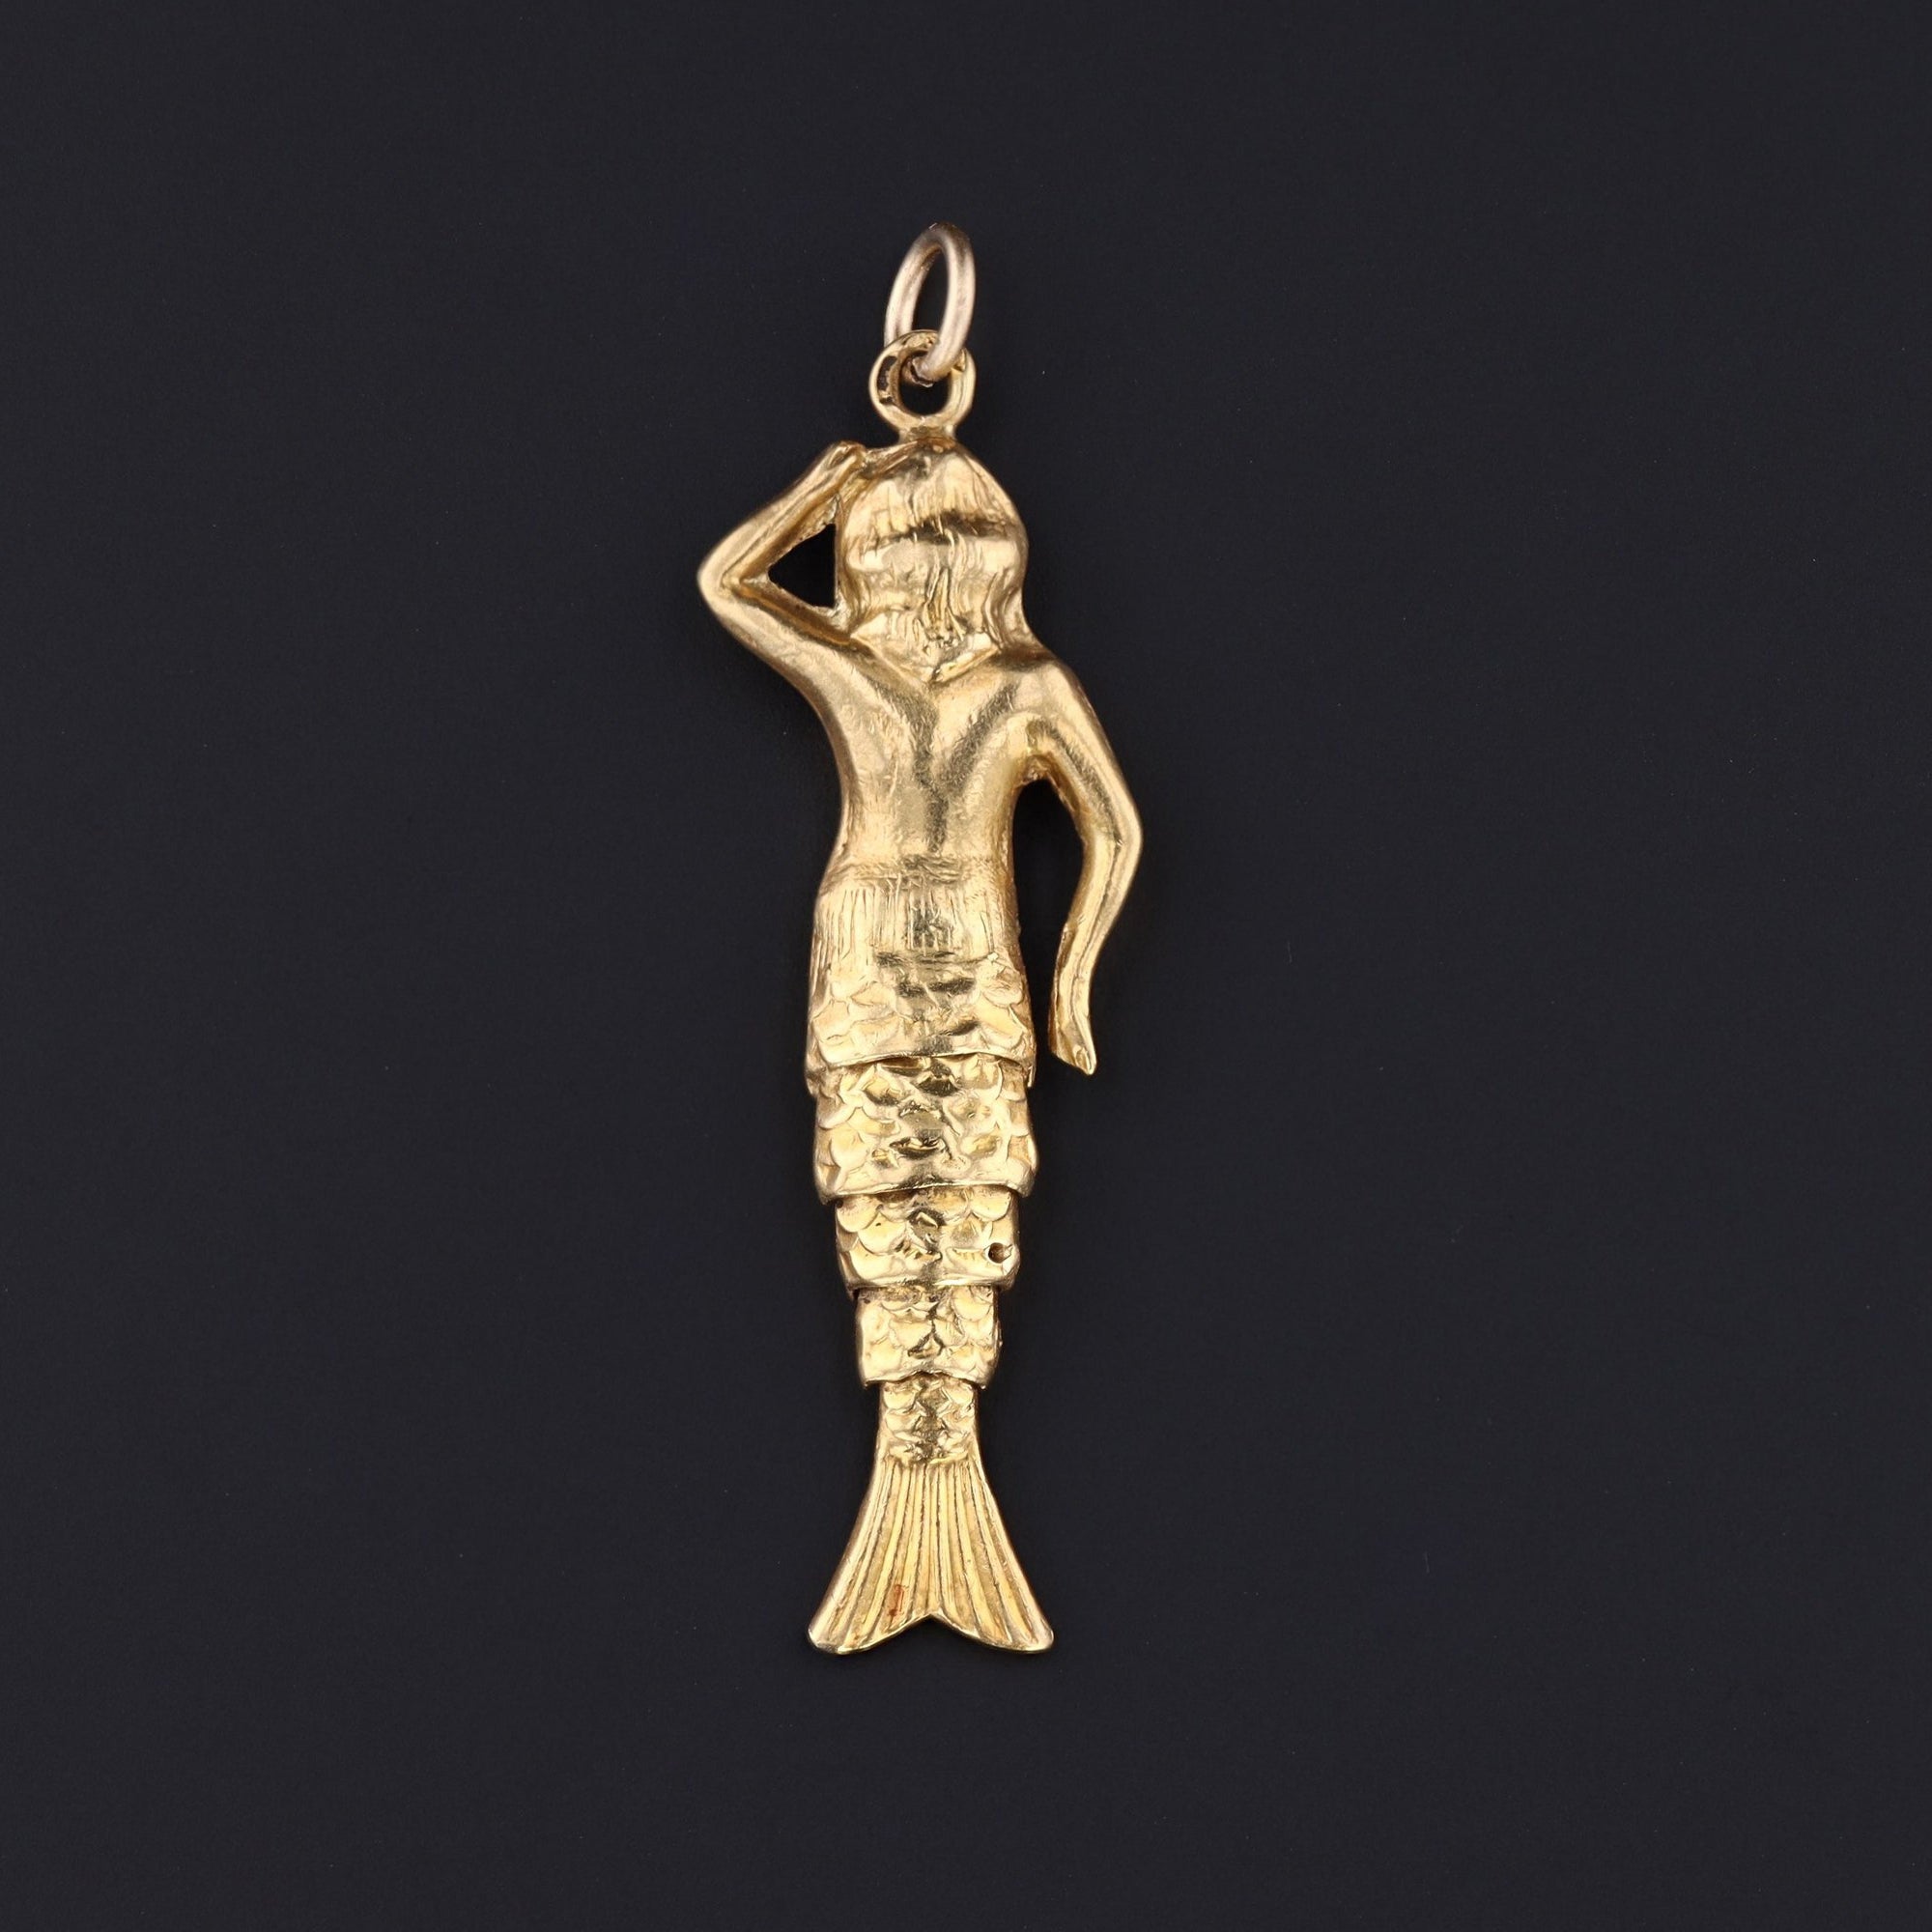 Handmade Boho Mermaid Necklace | Handmade Jewelry